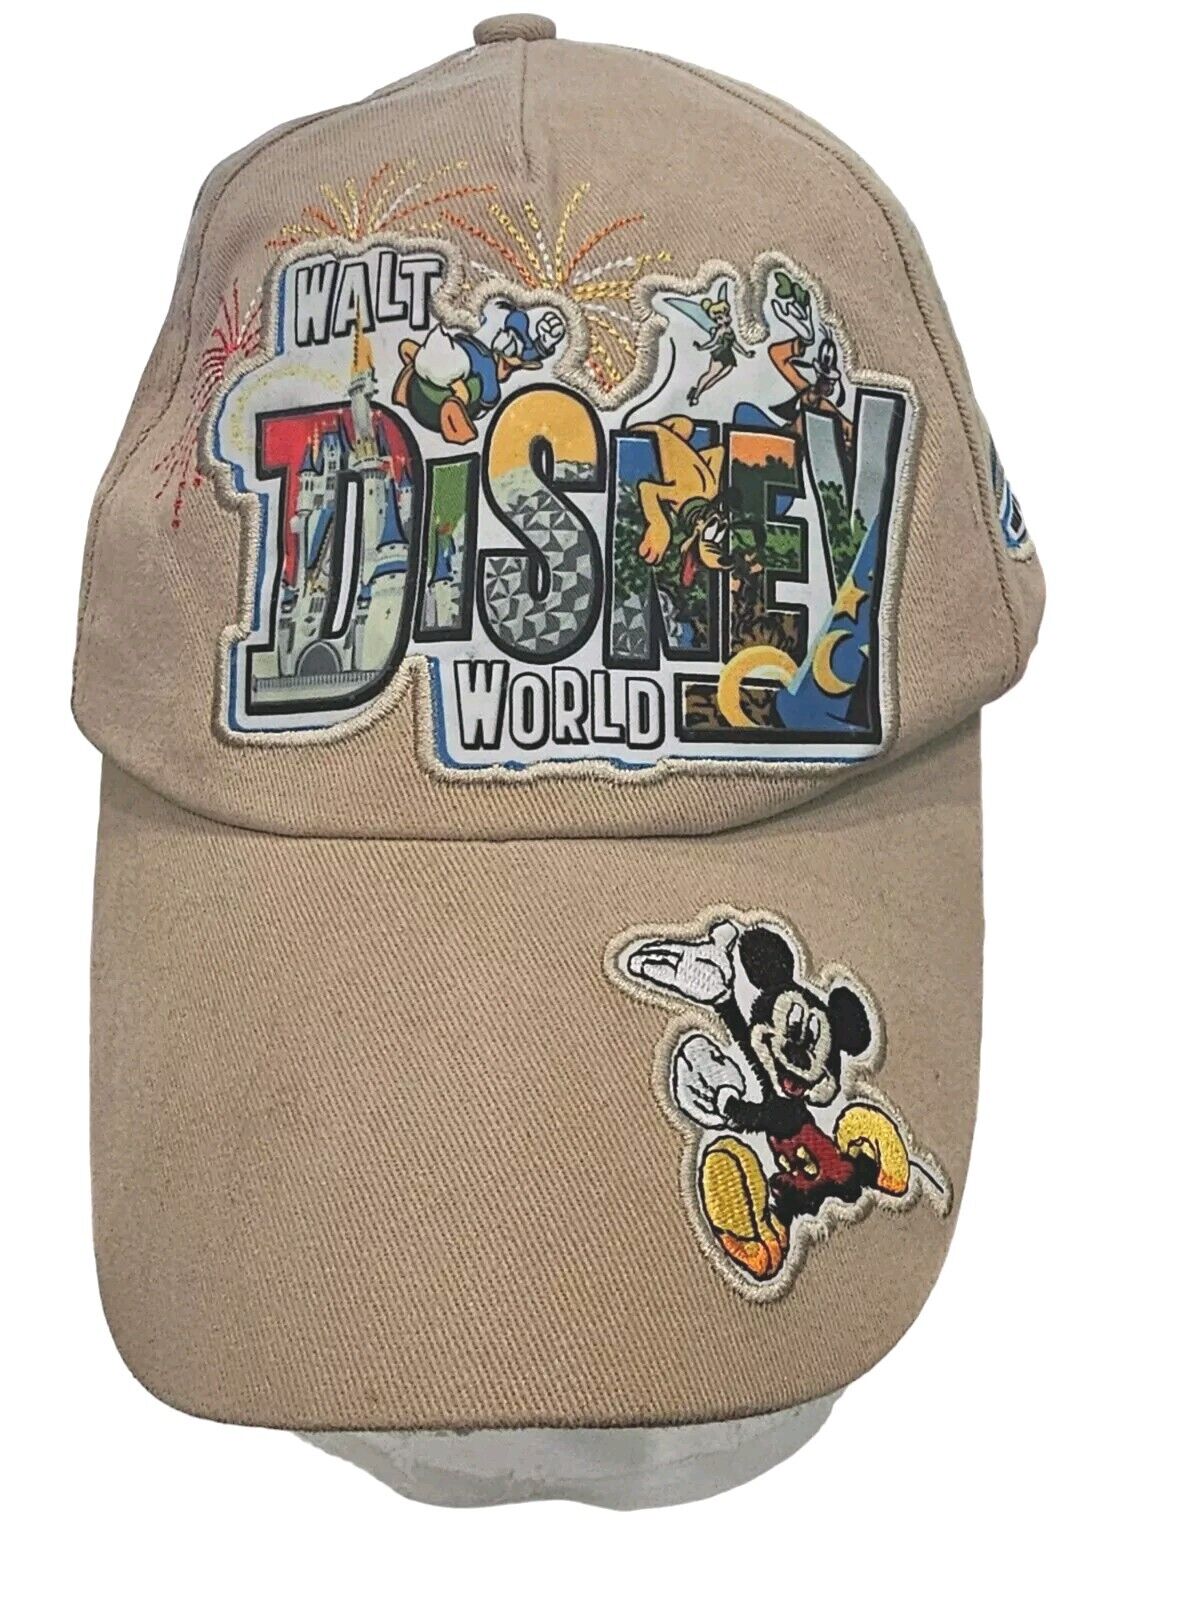 Vintage Walt Disney World Disney Parks Adjustable Hat Cap Mickey Mouse Beige NWT